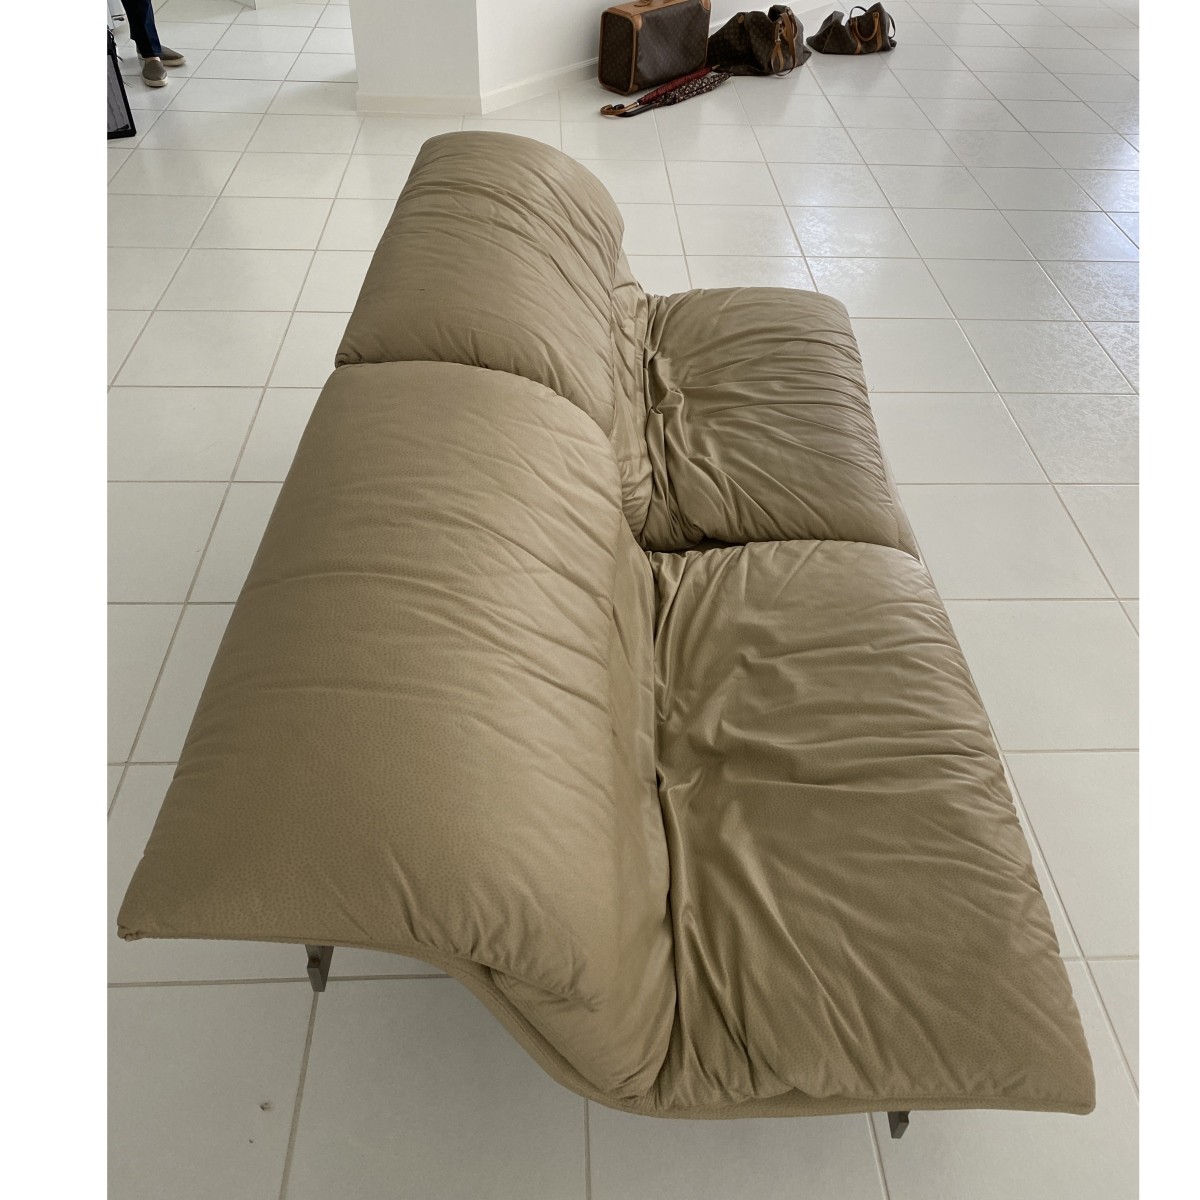 Saporiti Leather "Wave" Two-Part Sofa